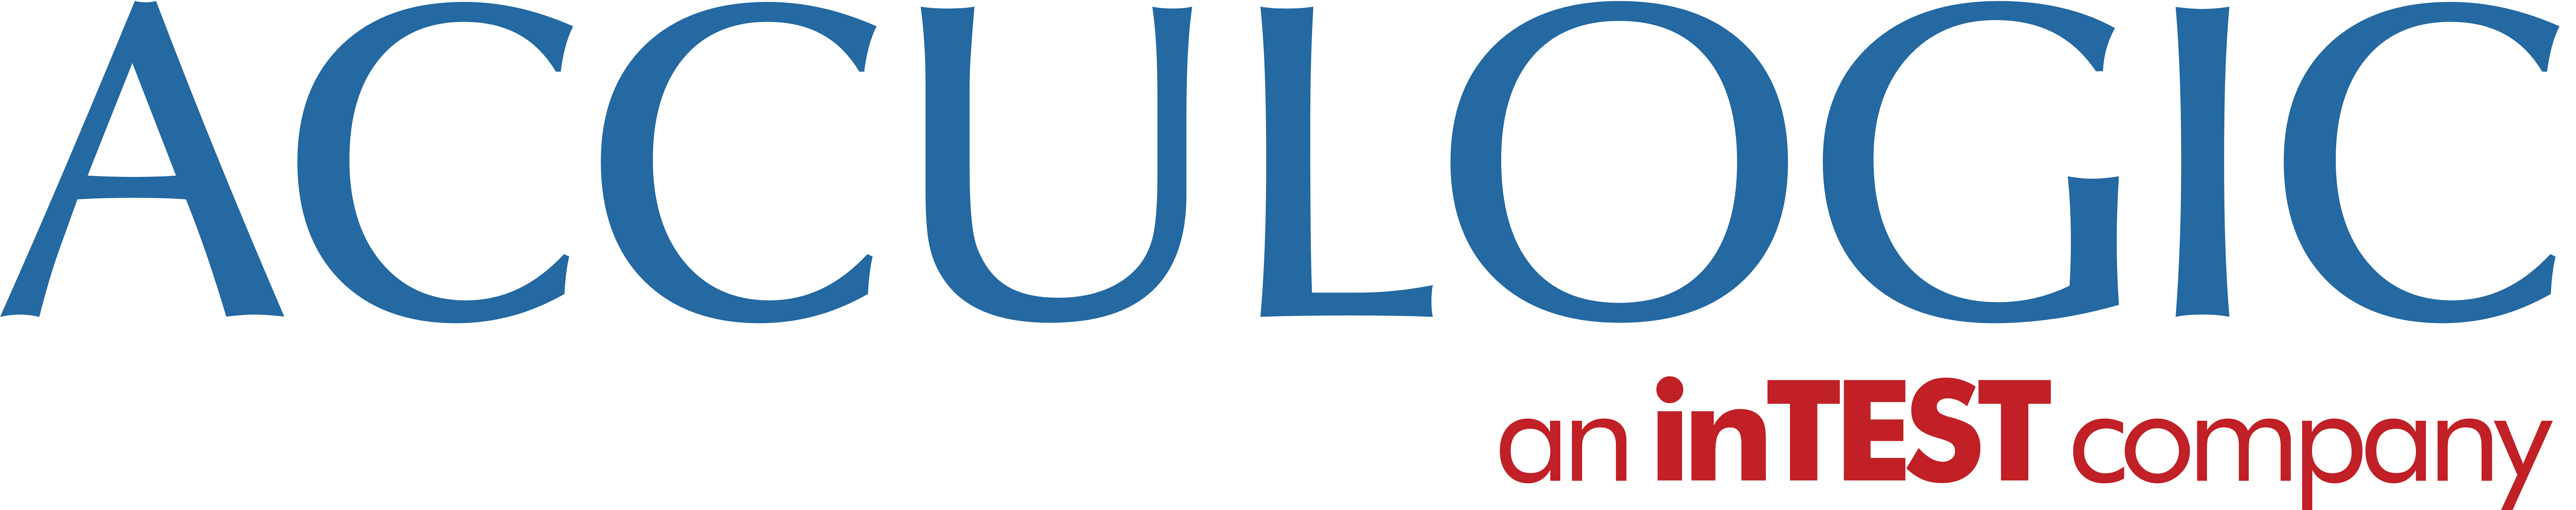 Acculogic logo